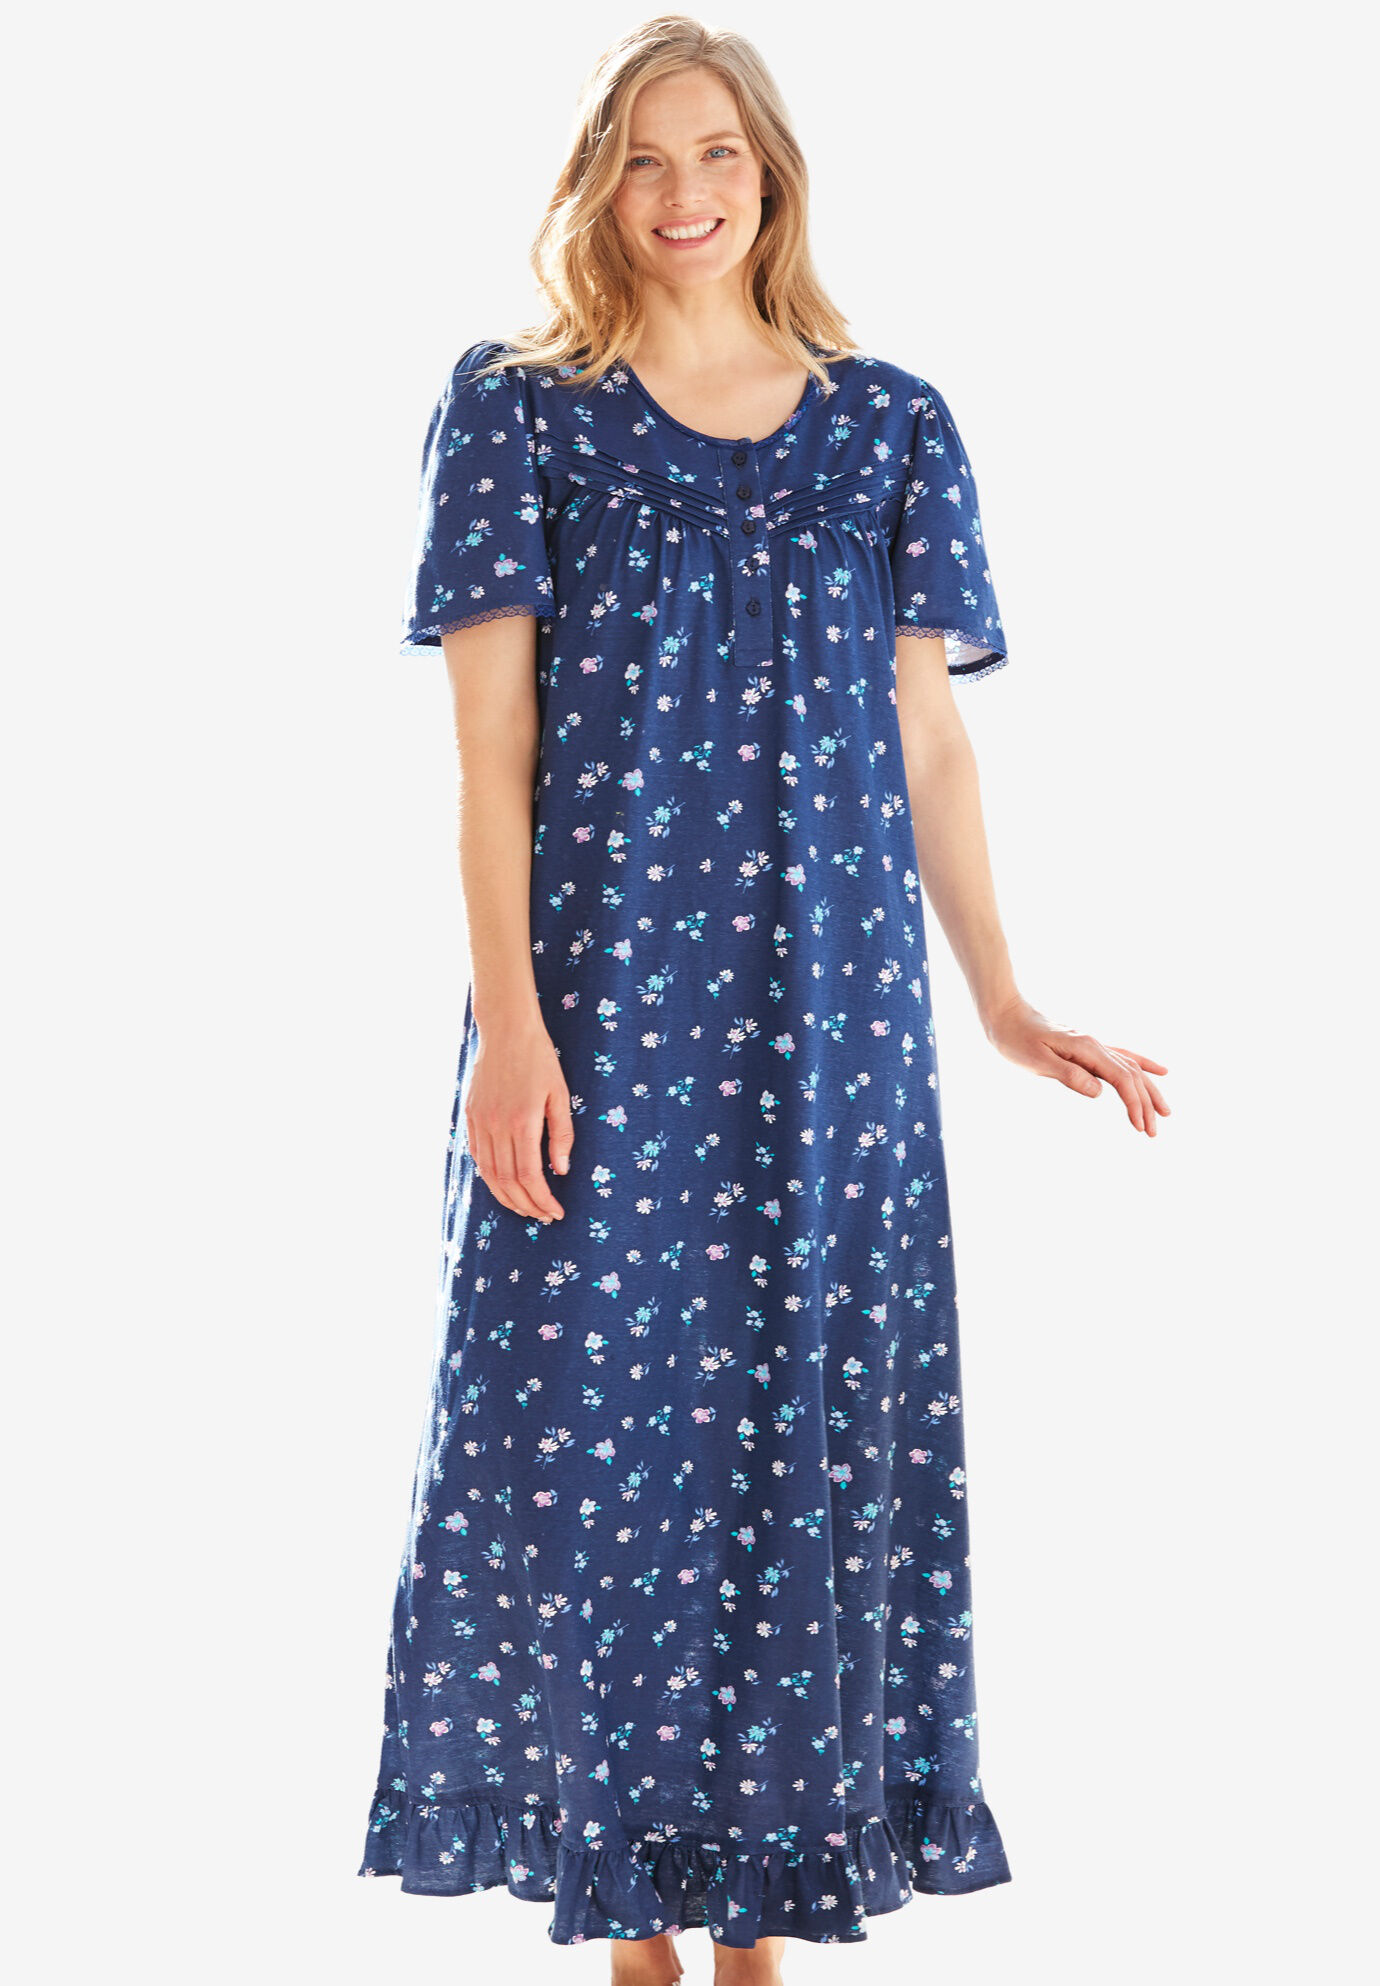 Only Necessities Women's Waltz Nightgown Tricot Nylon Plus Sizes Banana Yellow